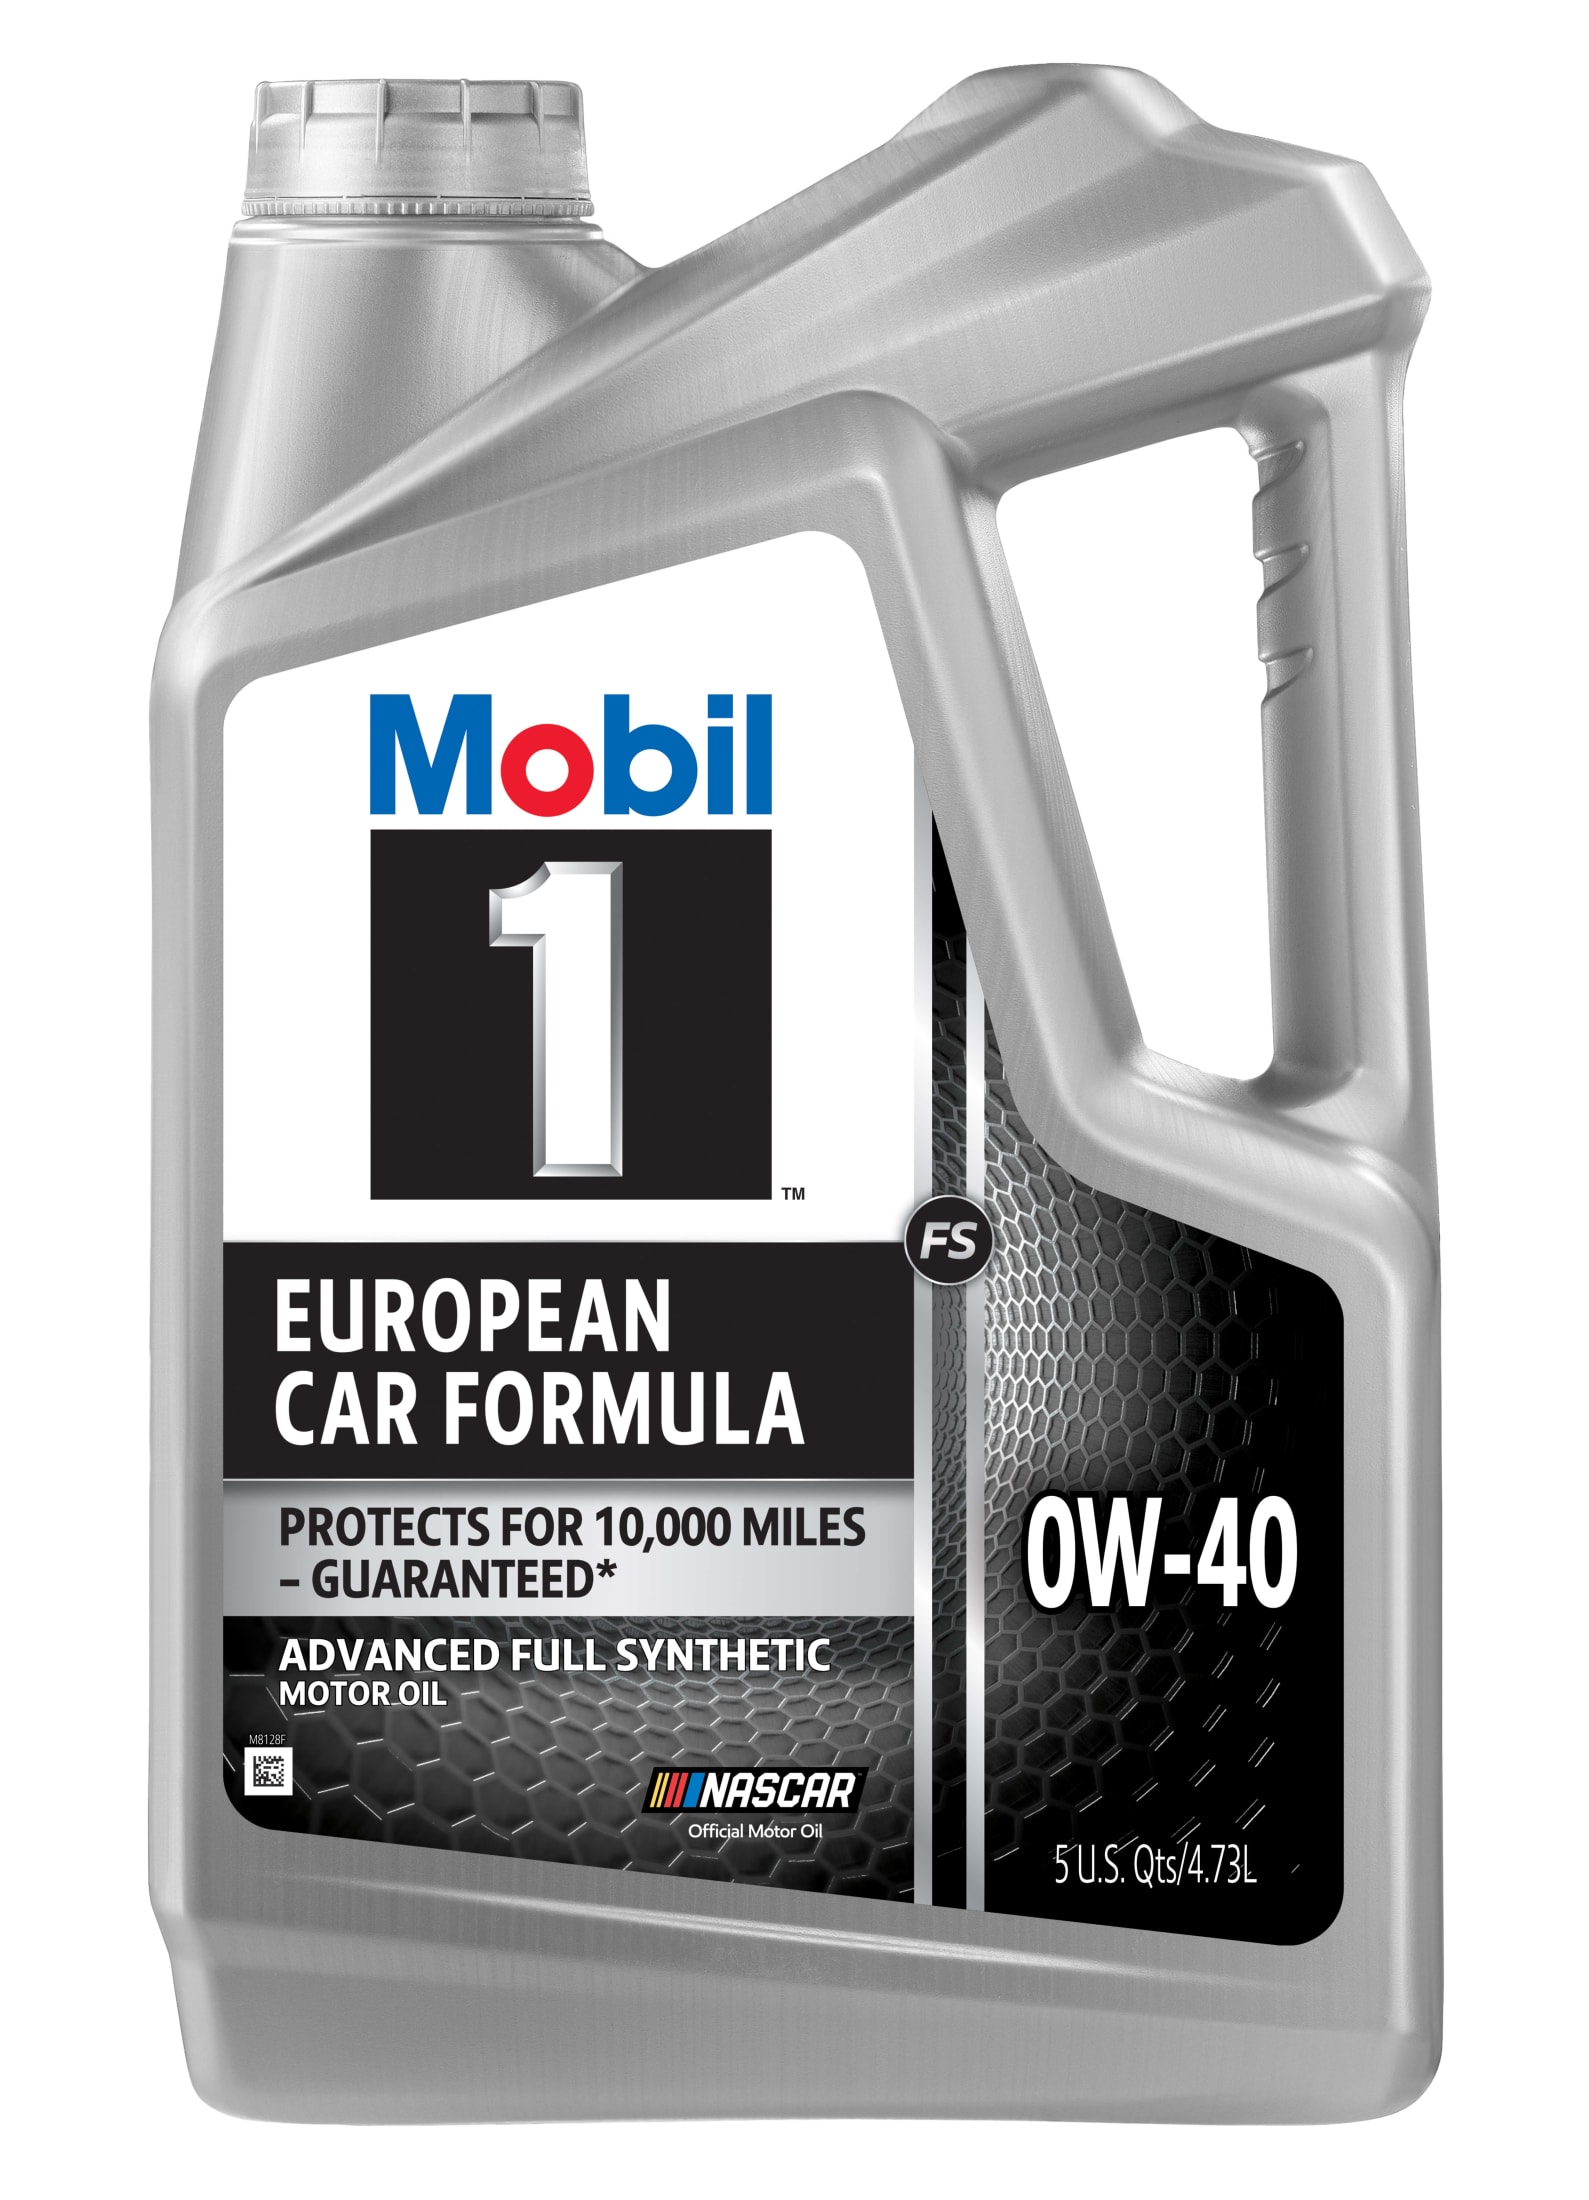 Mobil 1 FS European Car Formula Full Synthetic Motor Oil 0W-40, 5 Quart - image 1 of 8